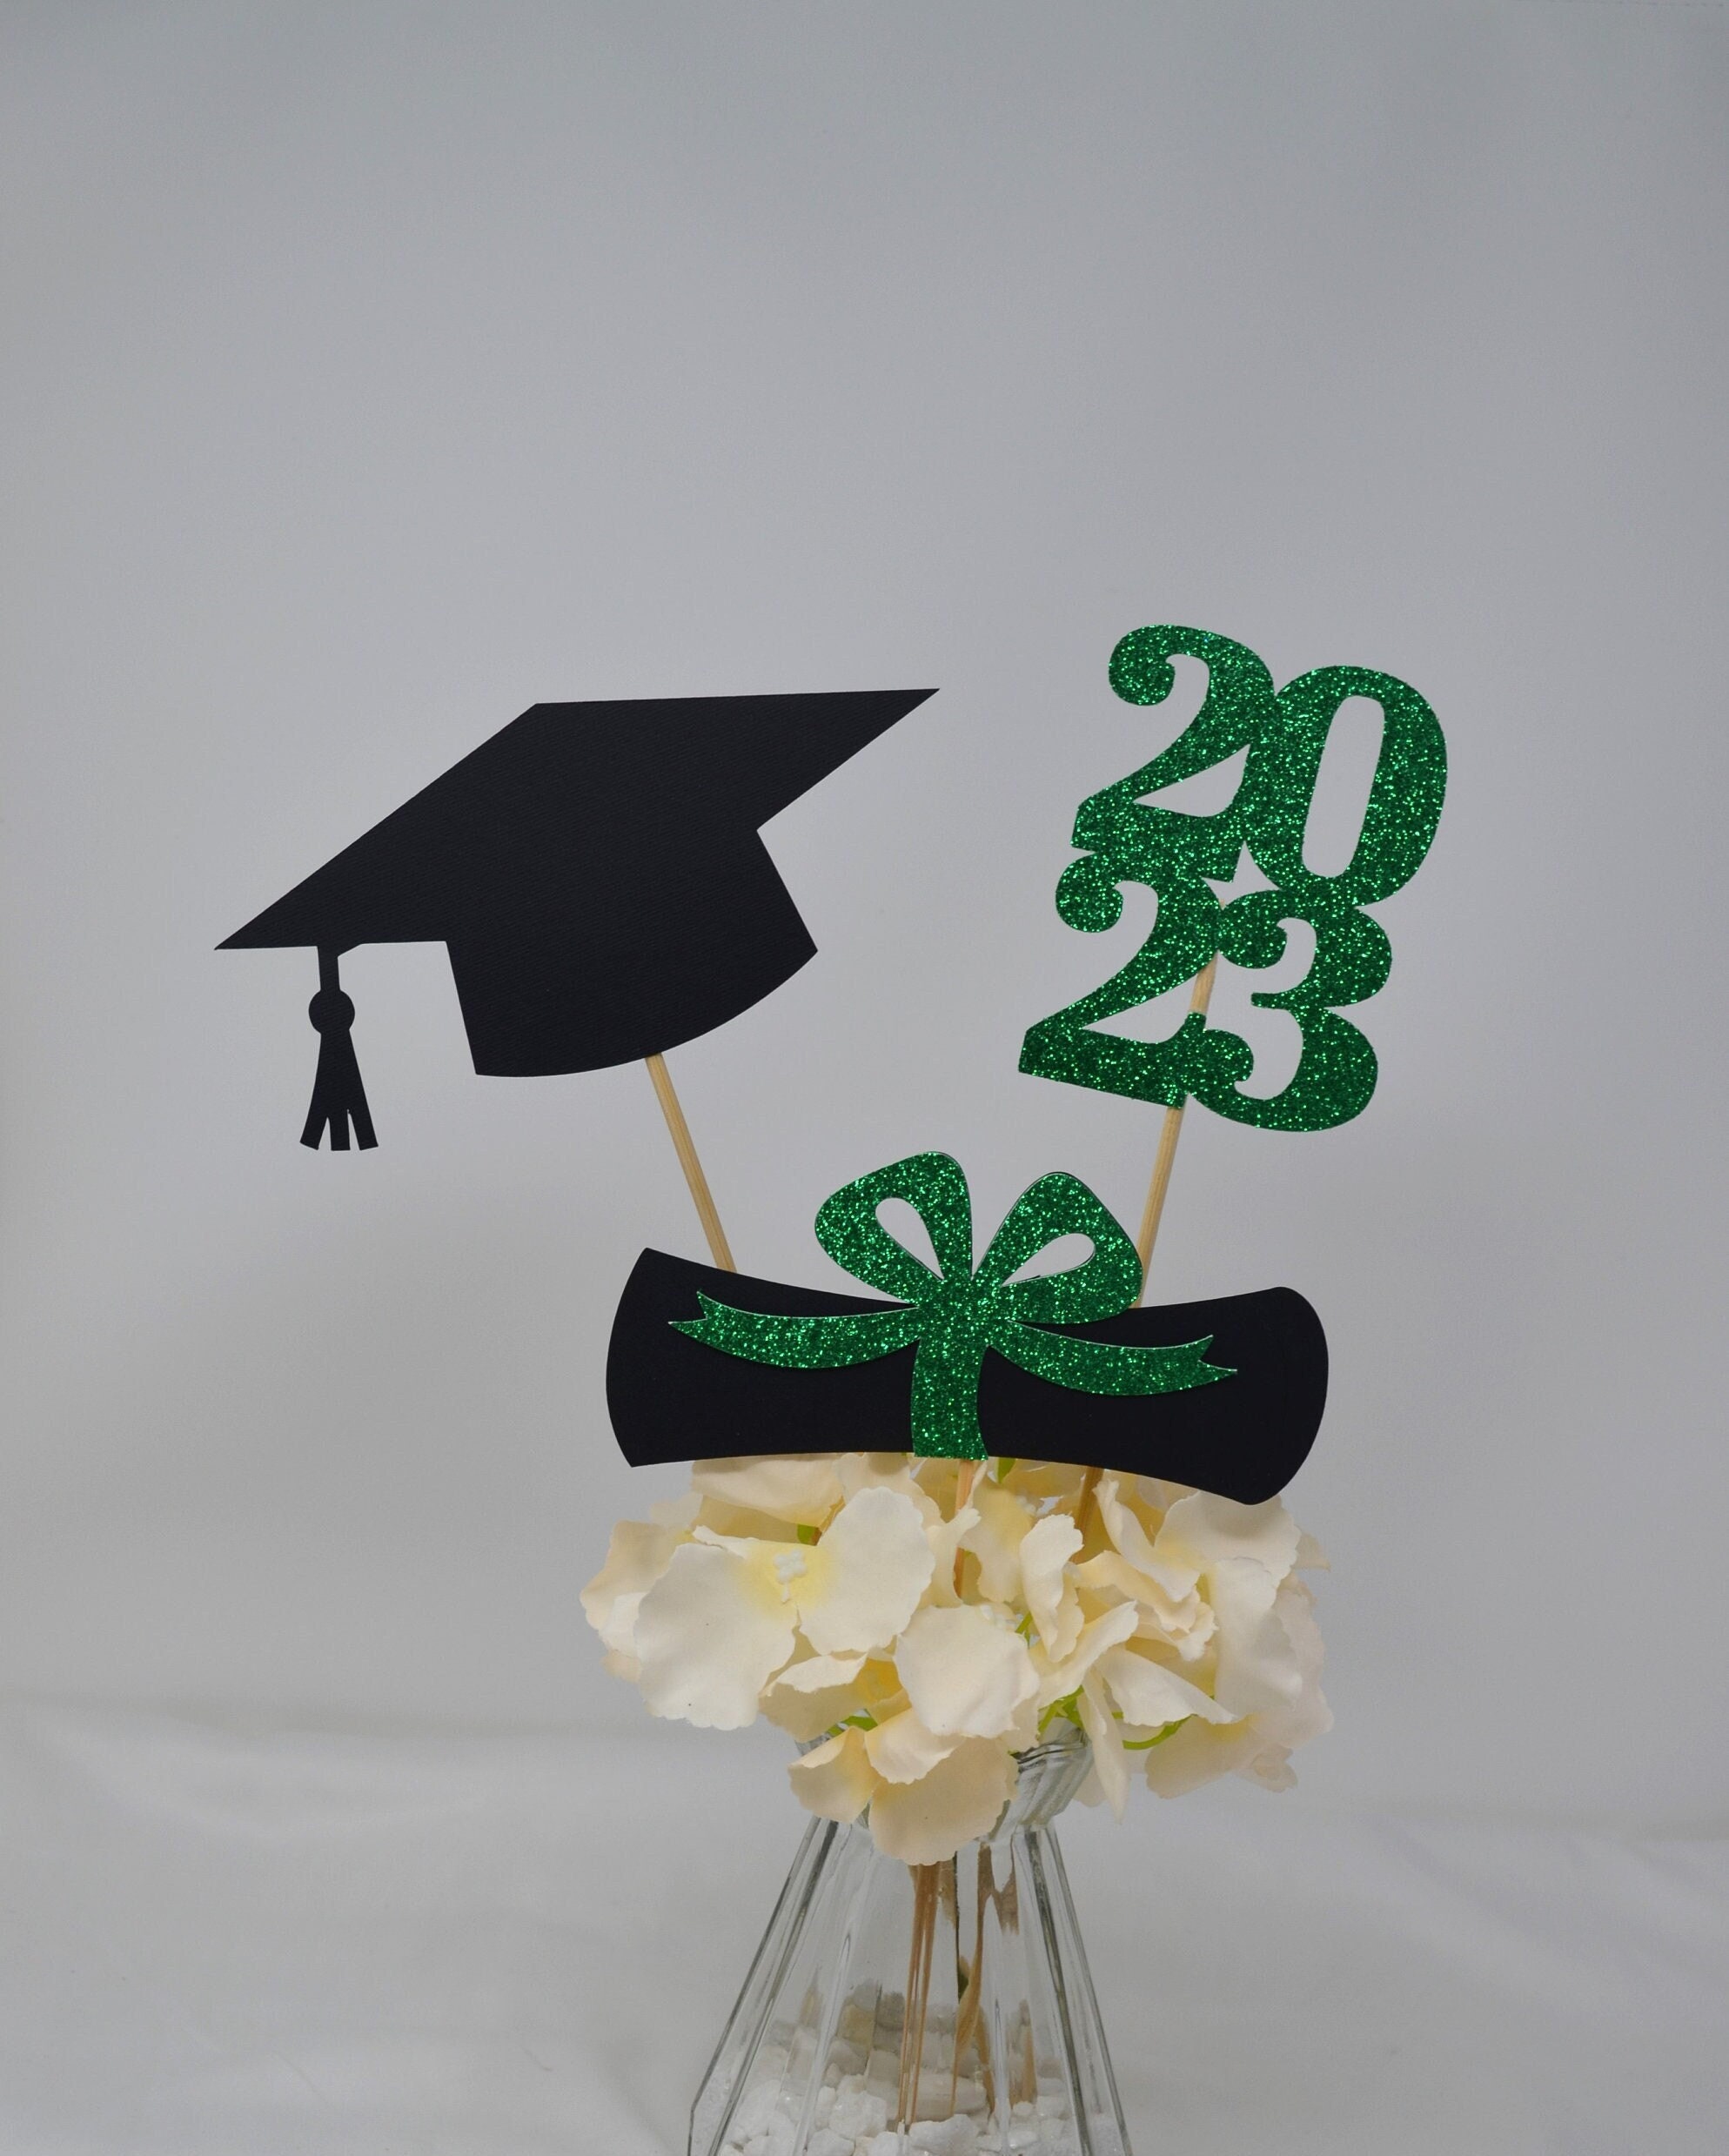 2023 Graduation Decorations Graduation Centerpiece Sticks image picture